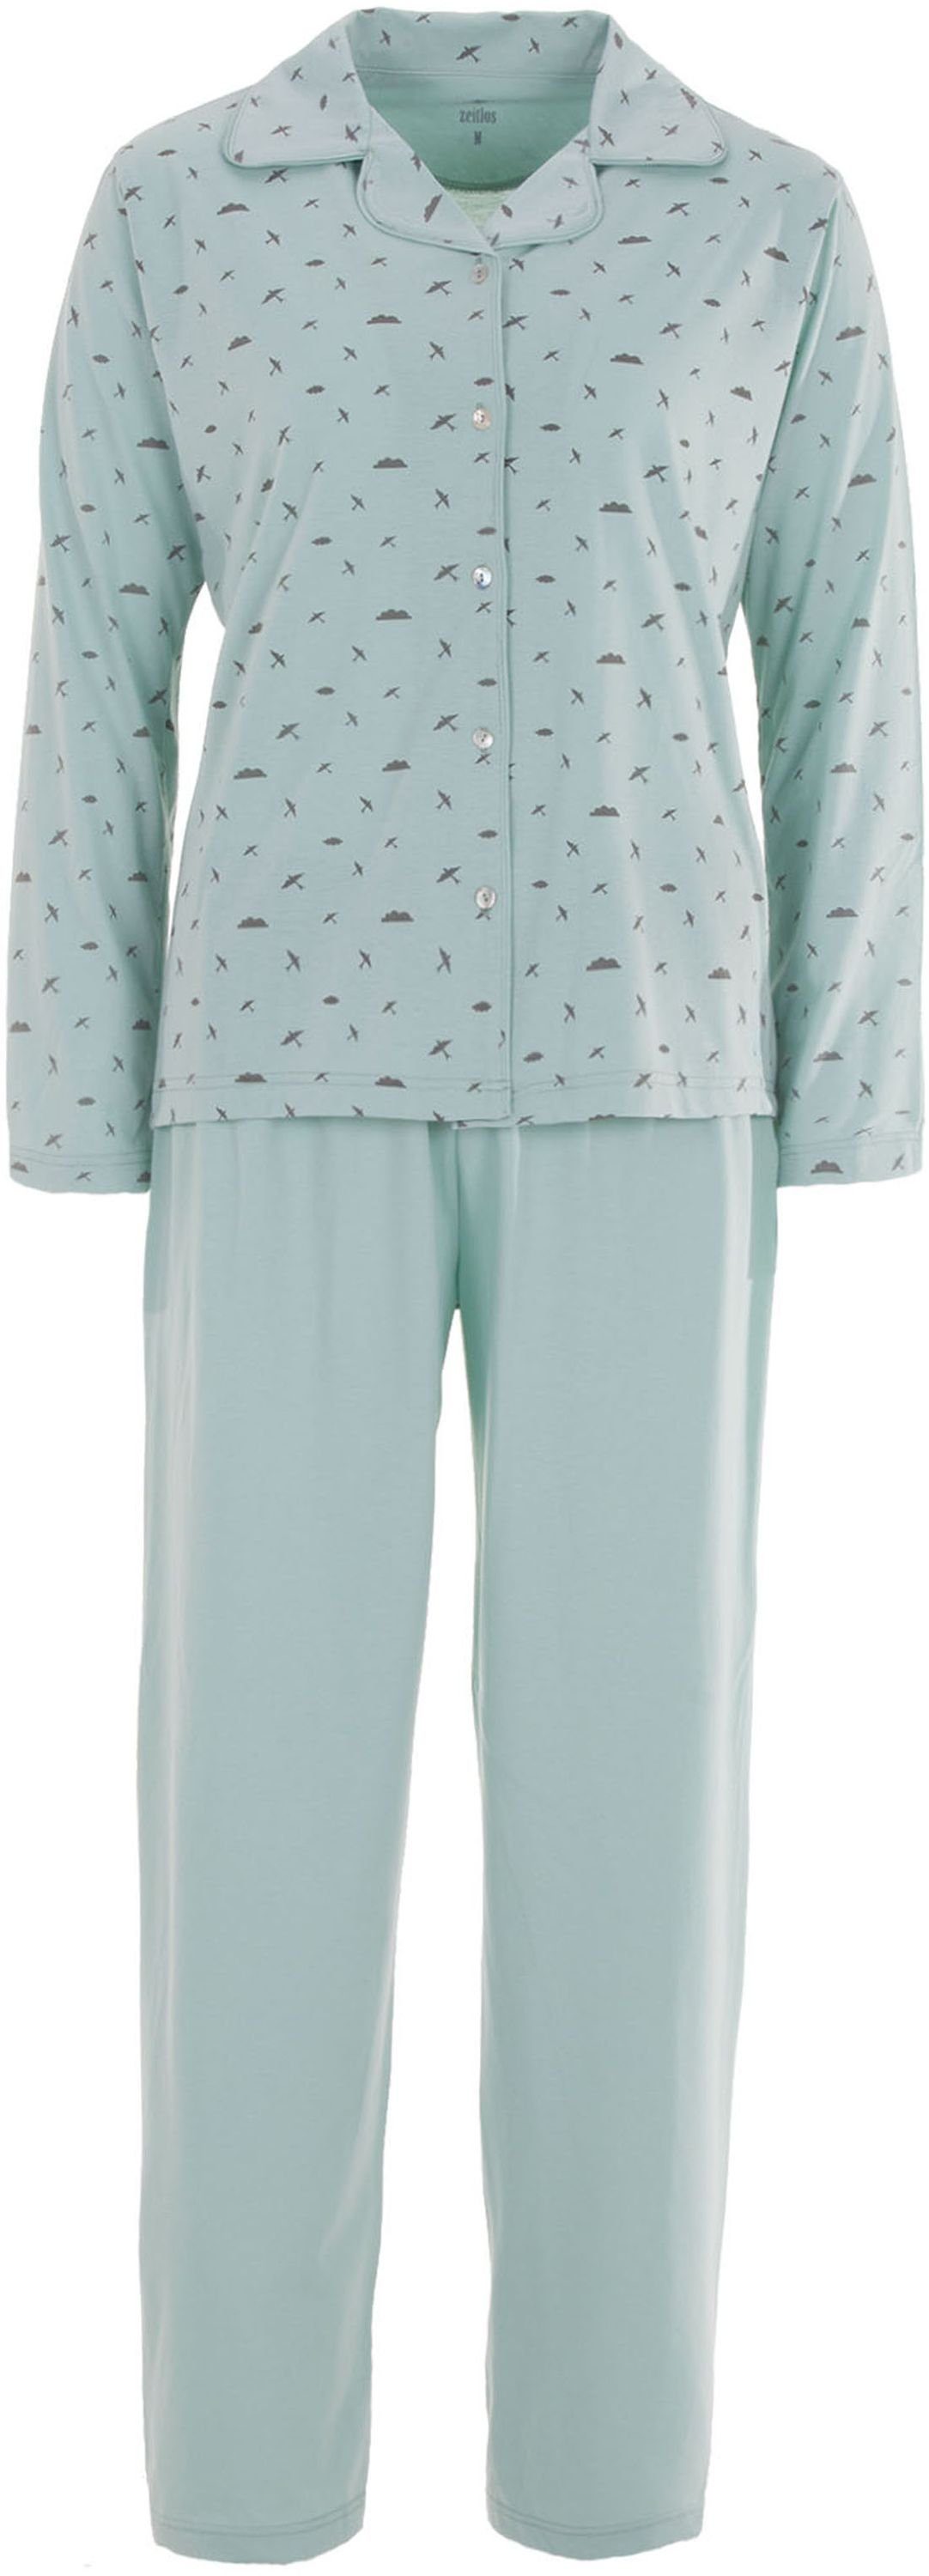 Schlafanzug zeitlos - Langarm Pyjama Schwalbe Set mint